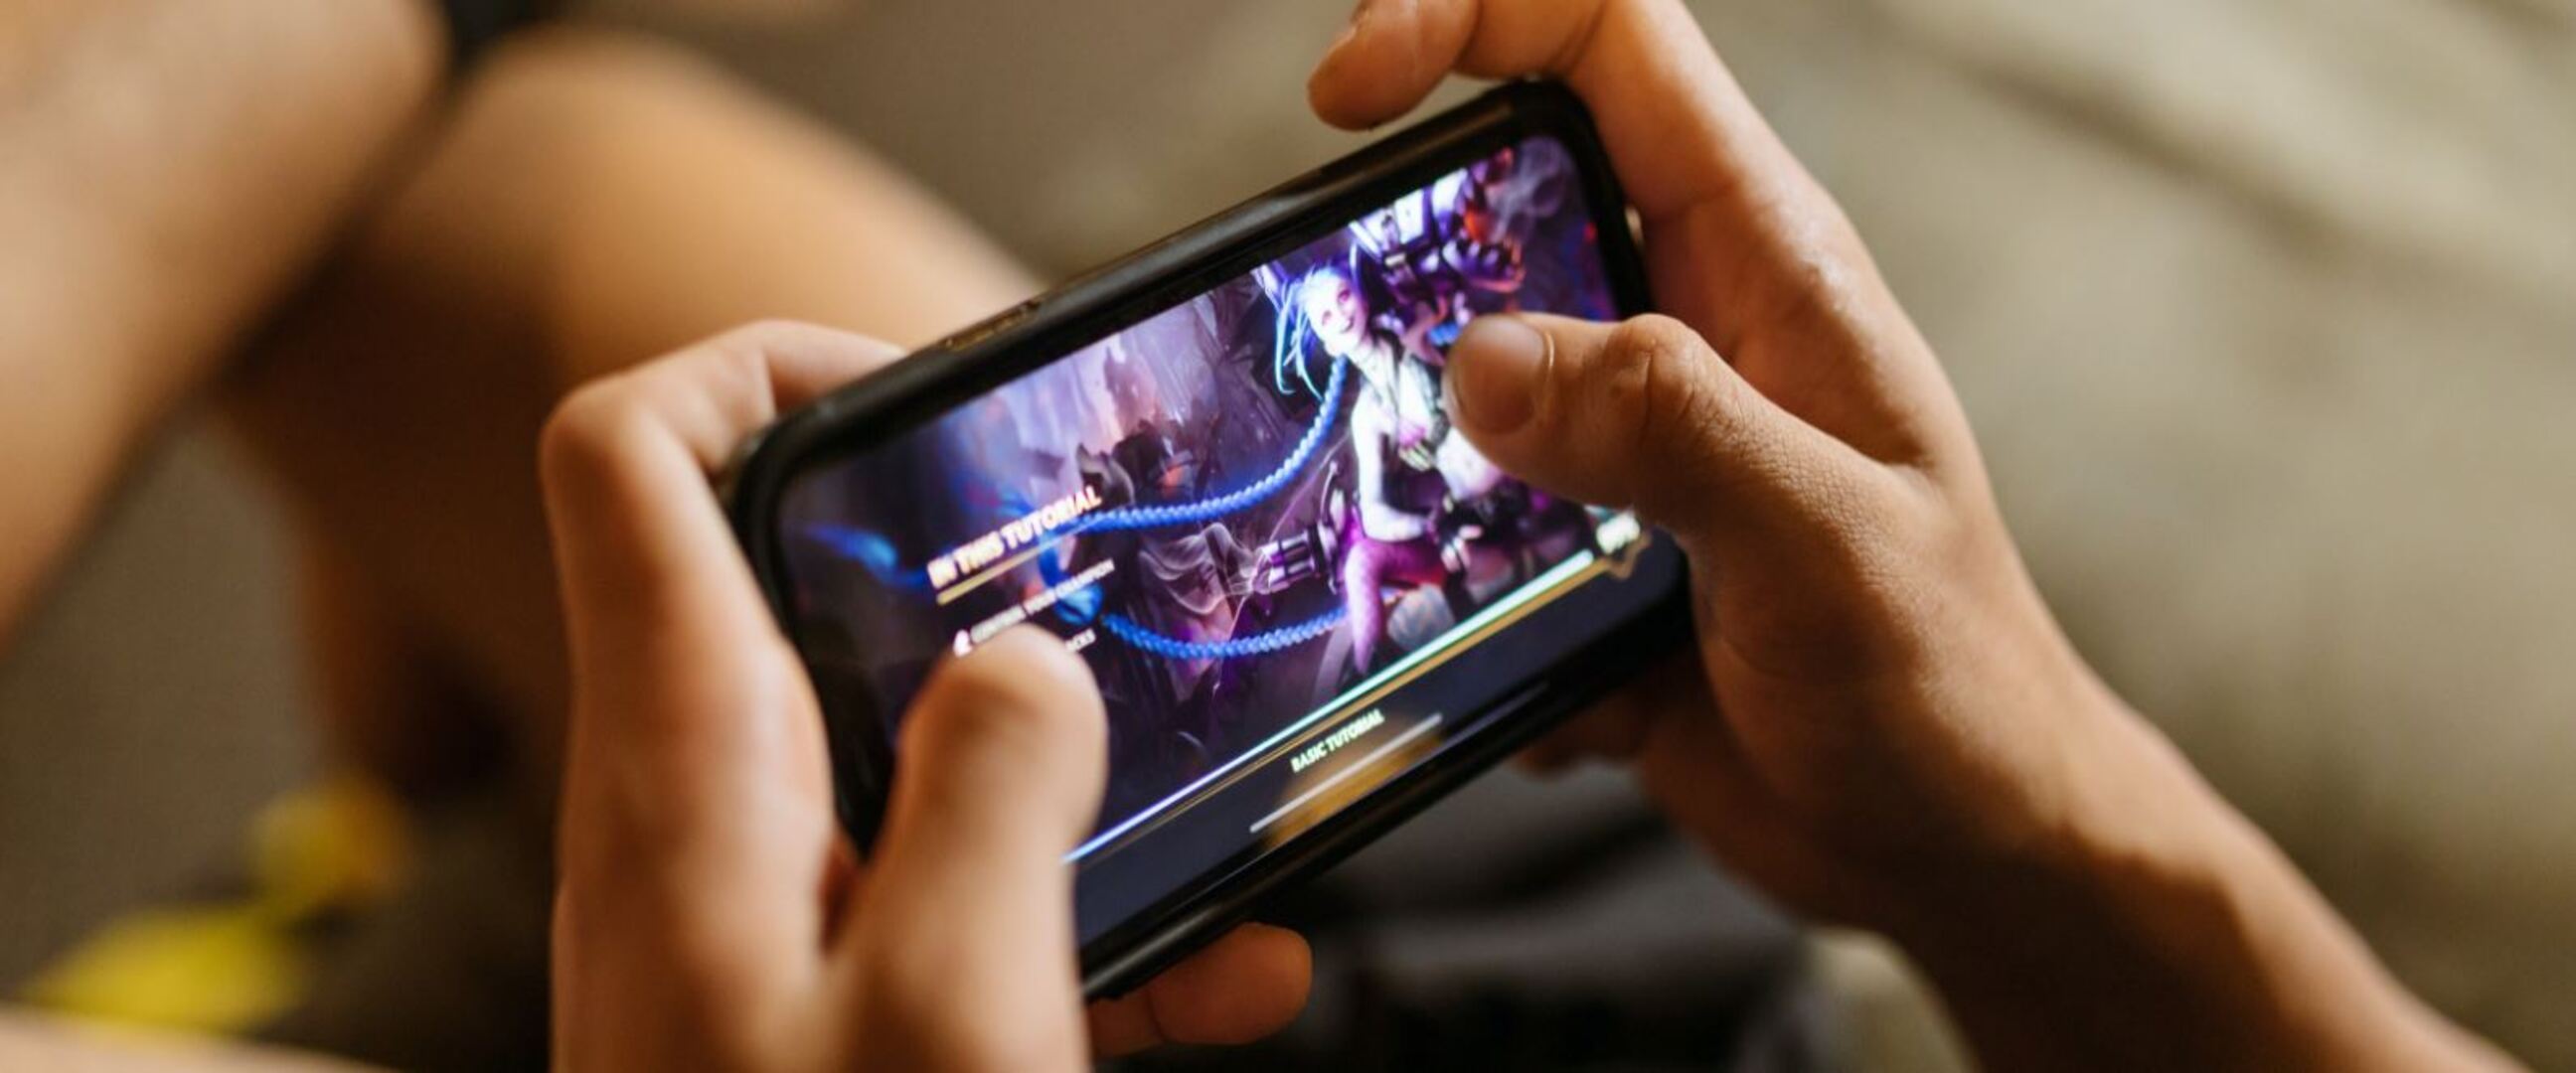 11 Game offline Android tampilan kece, nggak kalah seru dari online